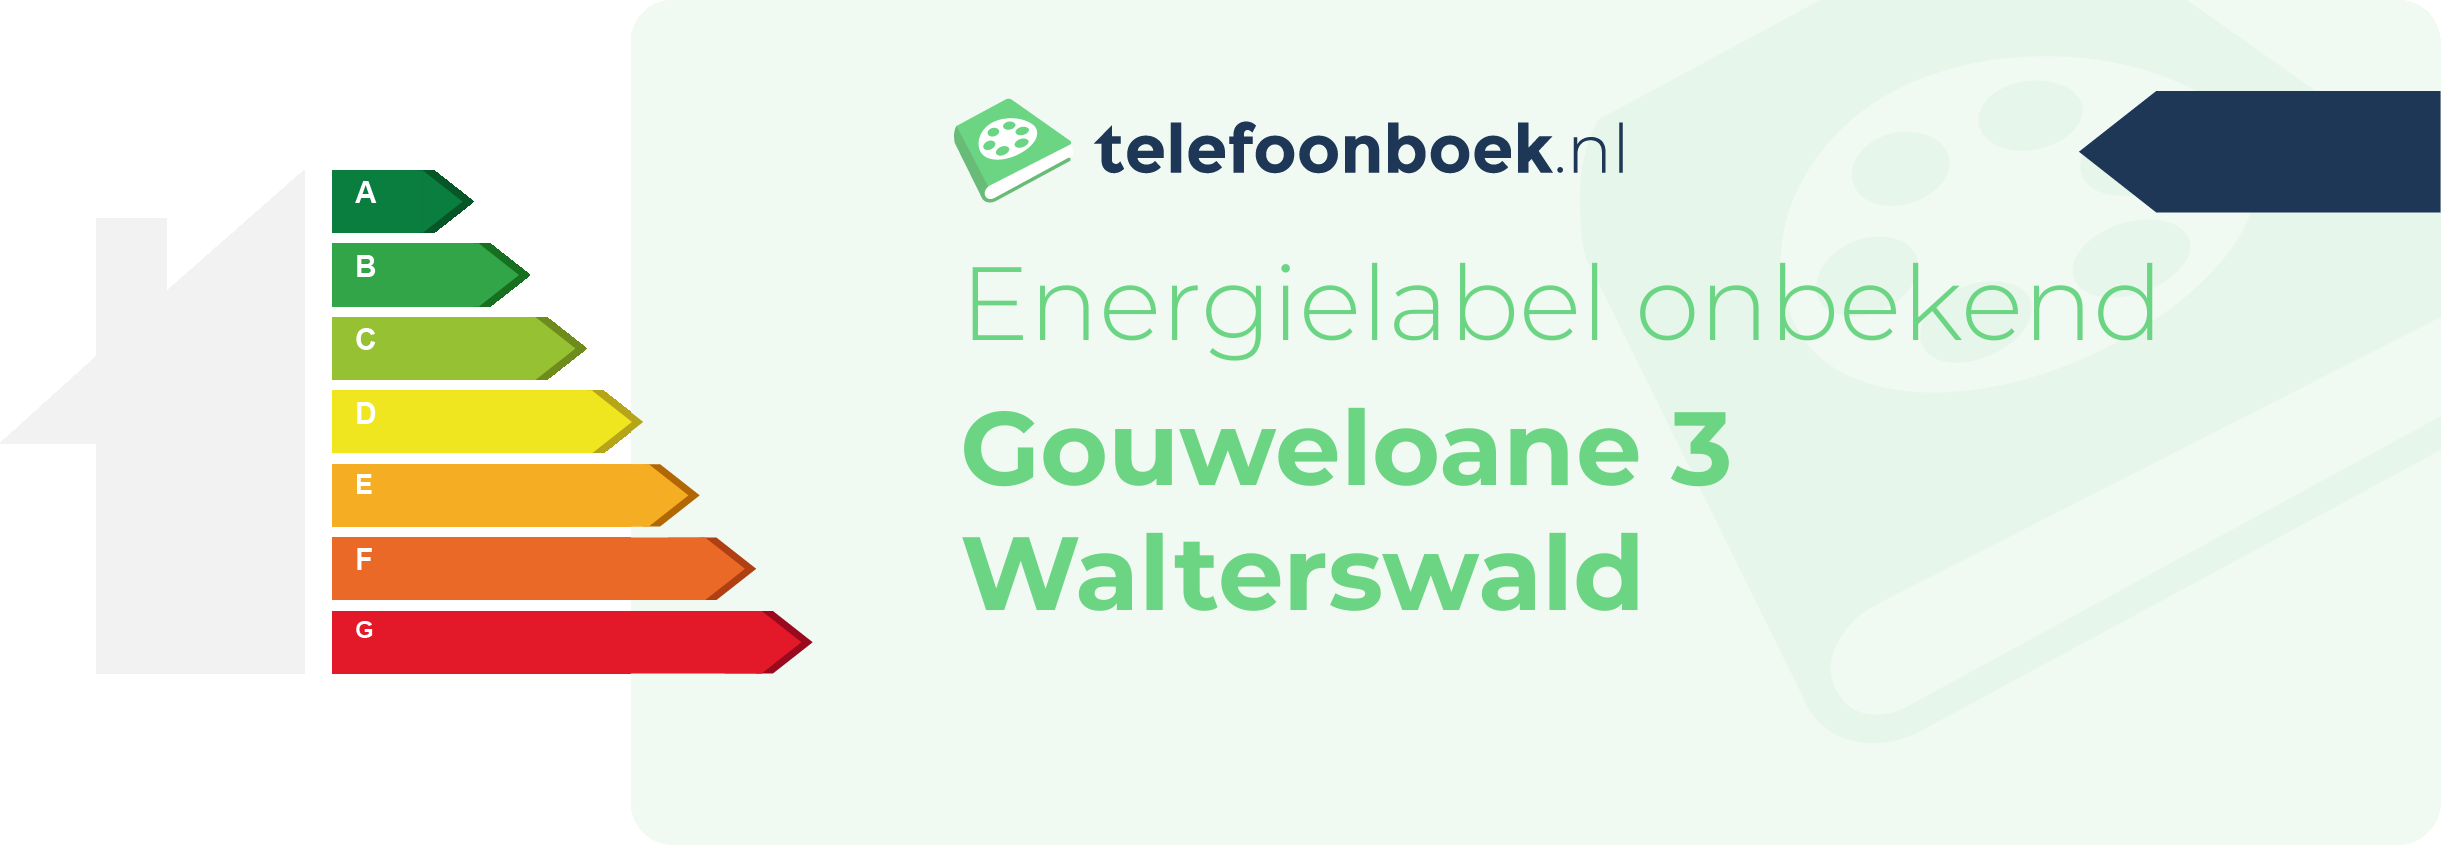 Energielabel Gouweloane 3 Walterswald